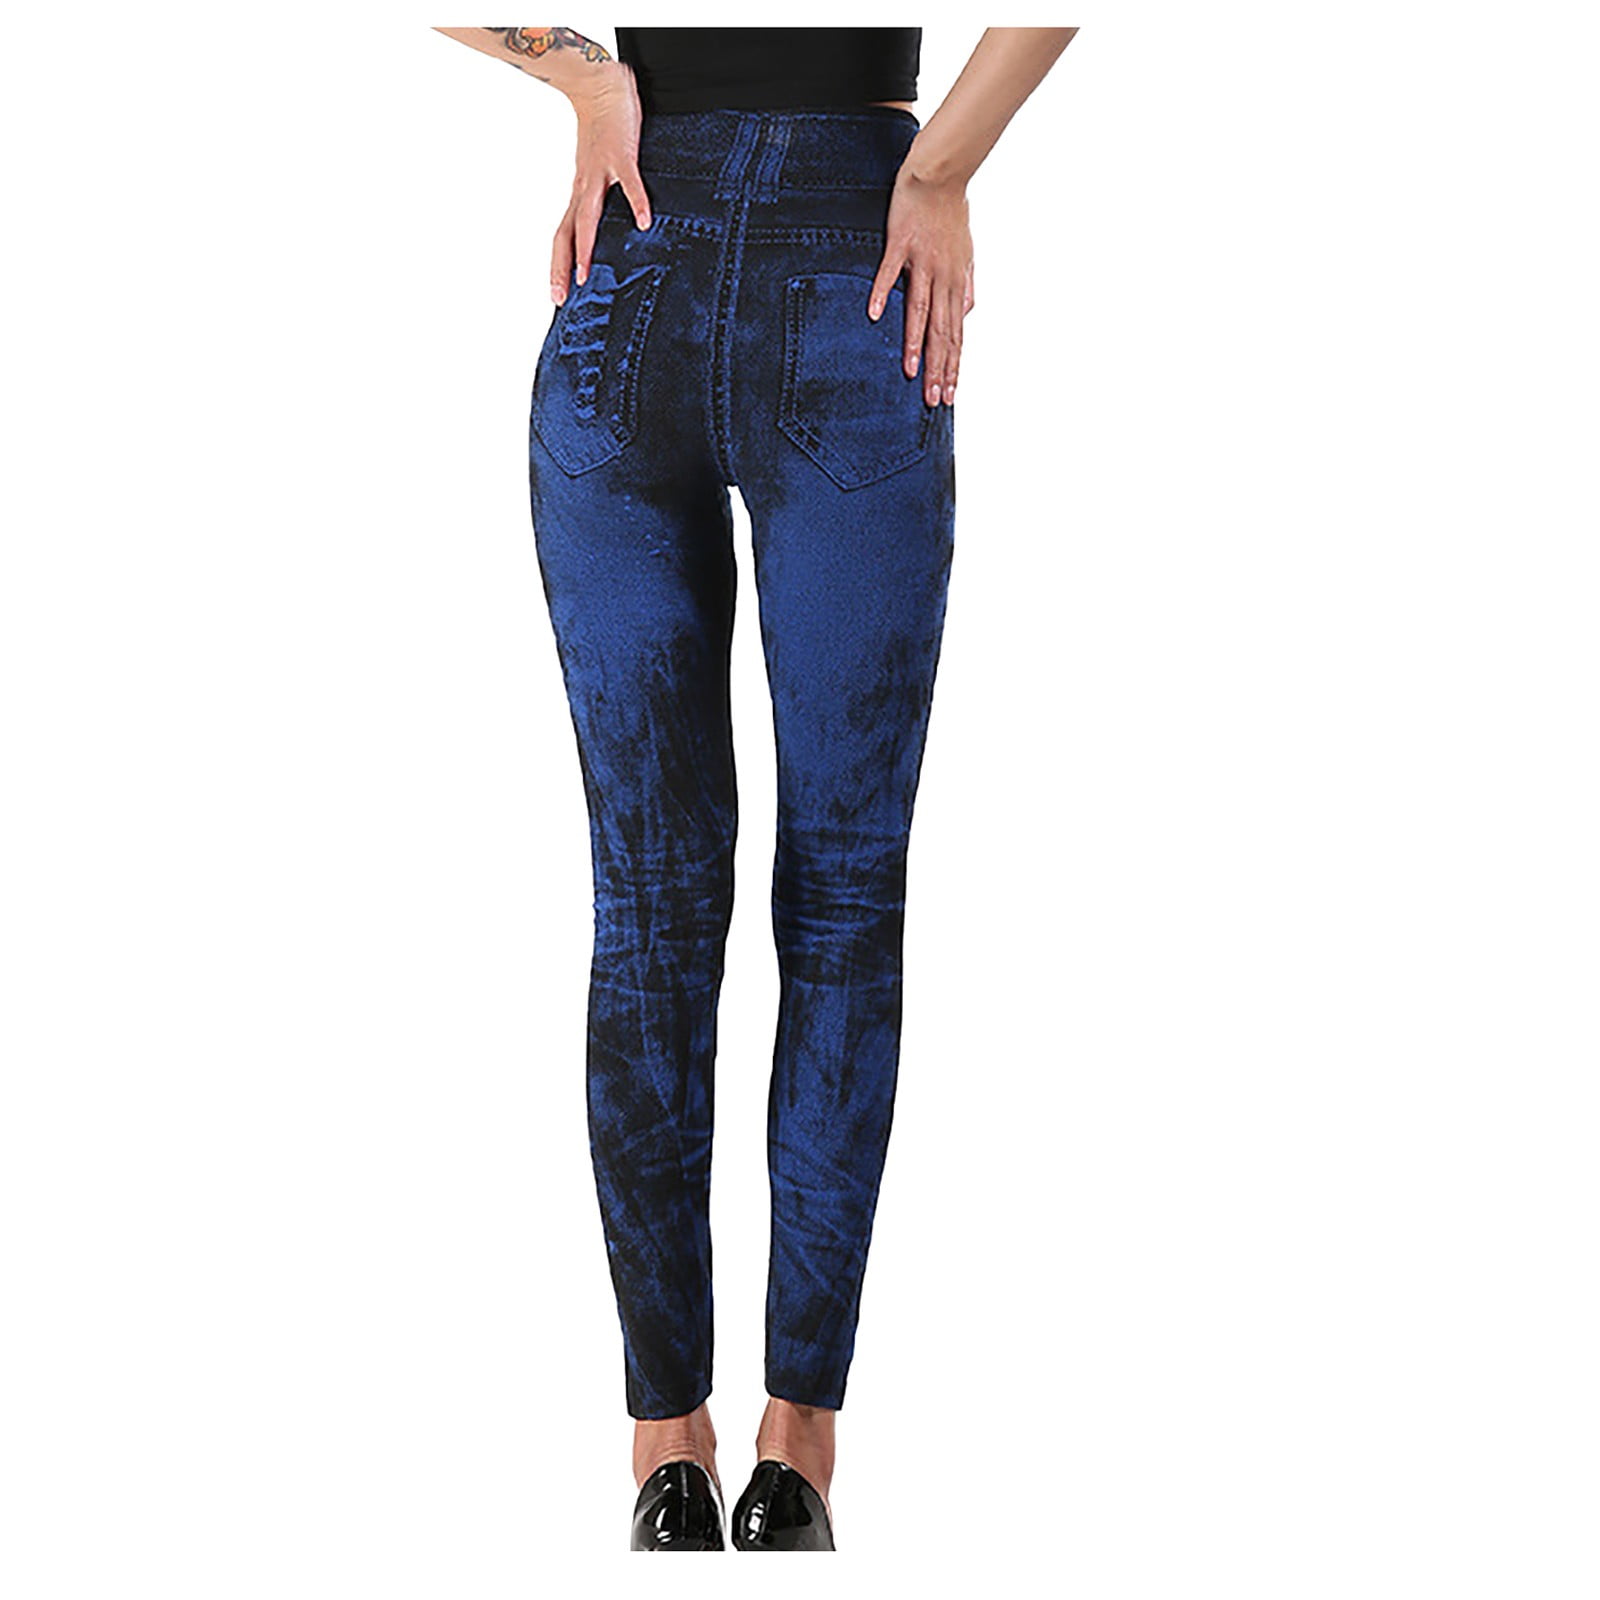 ZXHACSJ Women's Stretchy Skinny Print Jeggings Lmitation Jeans